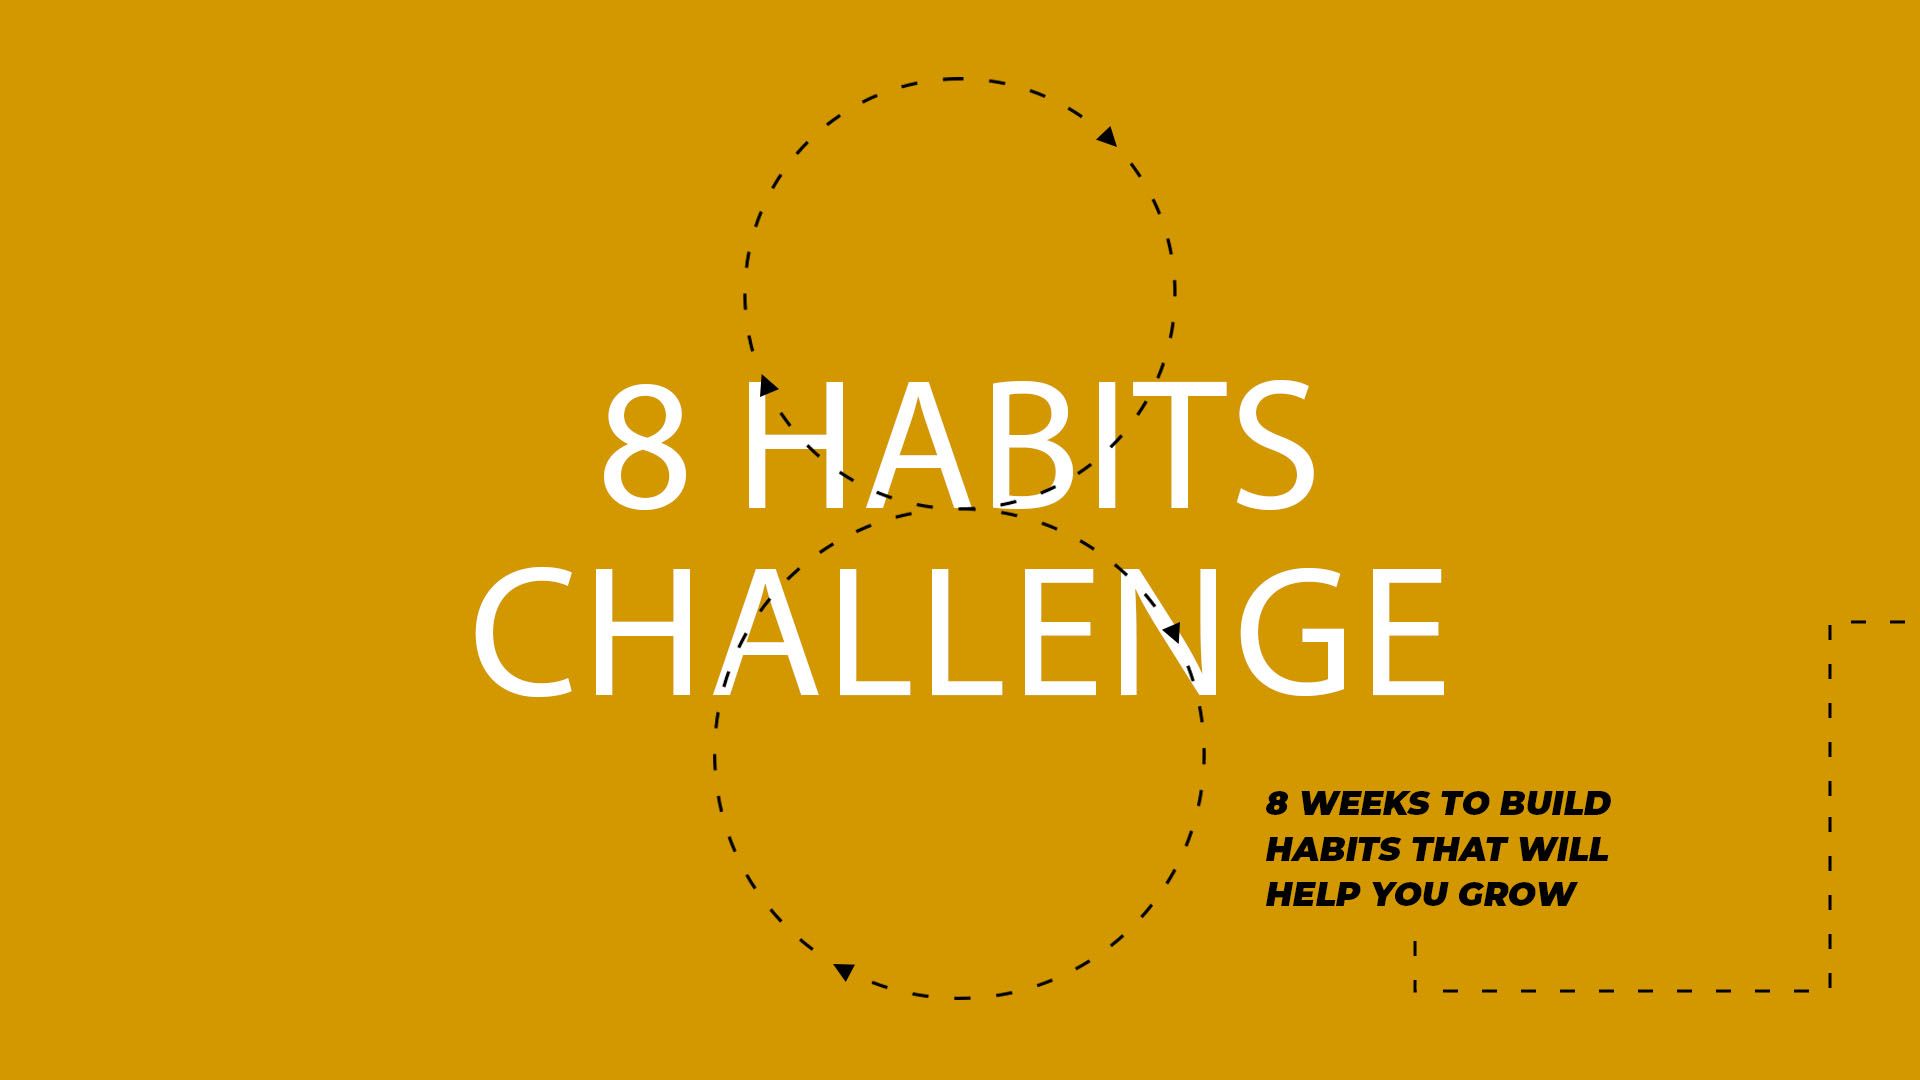 The 8 Habits Challenge